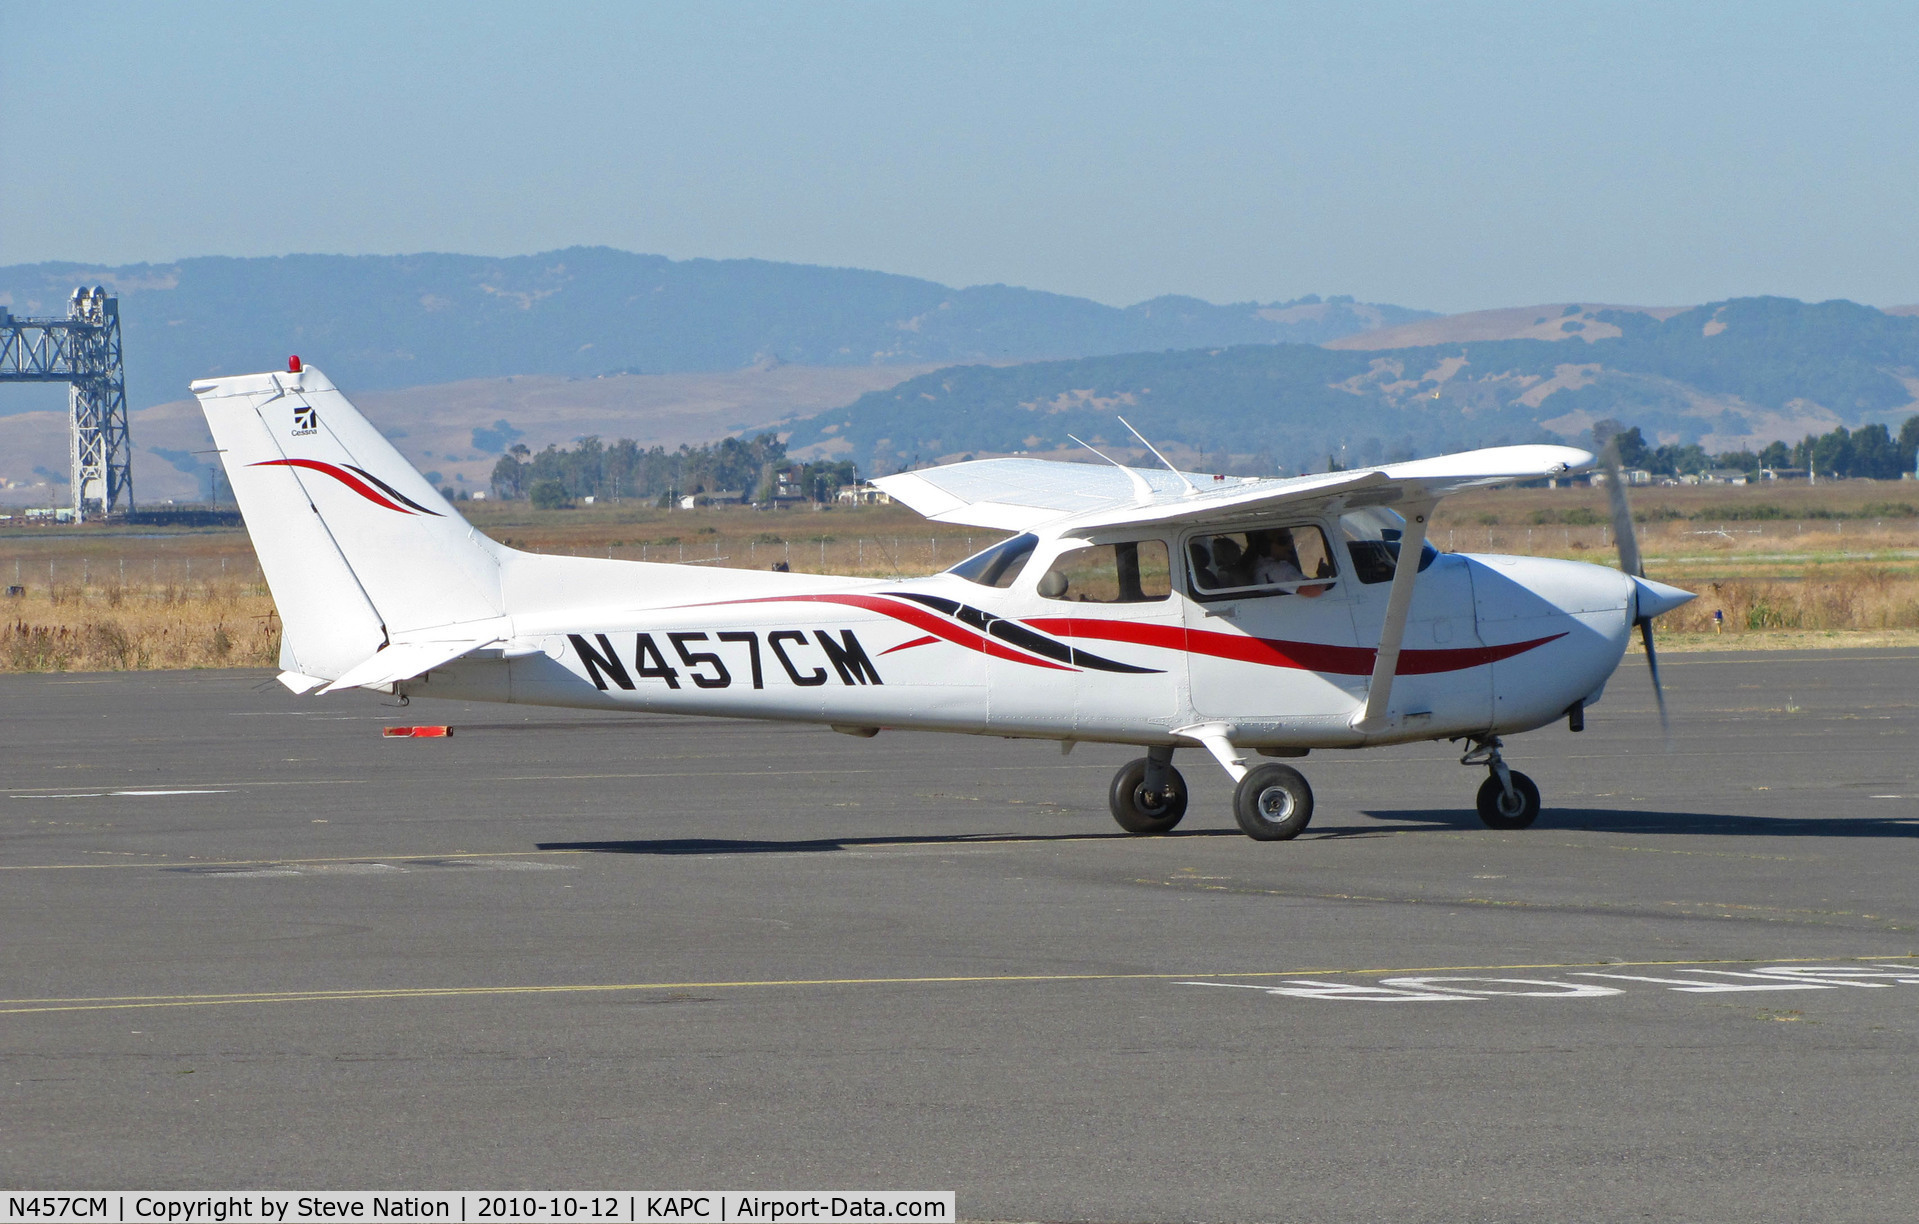 N457CM, 2000 Cessna 172R C/N 17280849, IASCO Training Center 2000 Cessna 172R for noontime stop on training flight from KRDD/Redding, CA @ Napa County Airport, CA